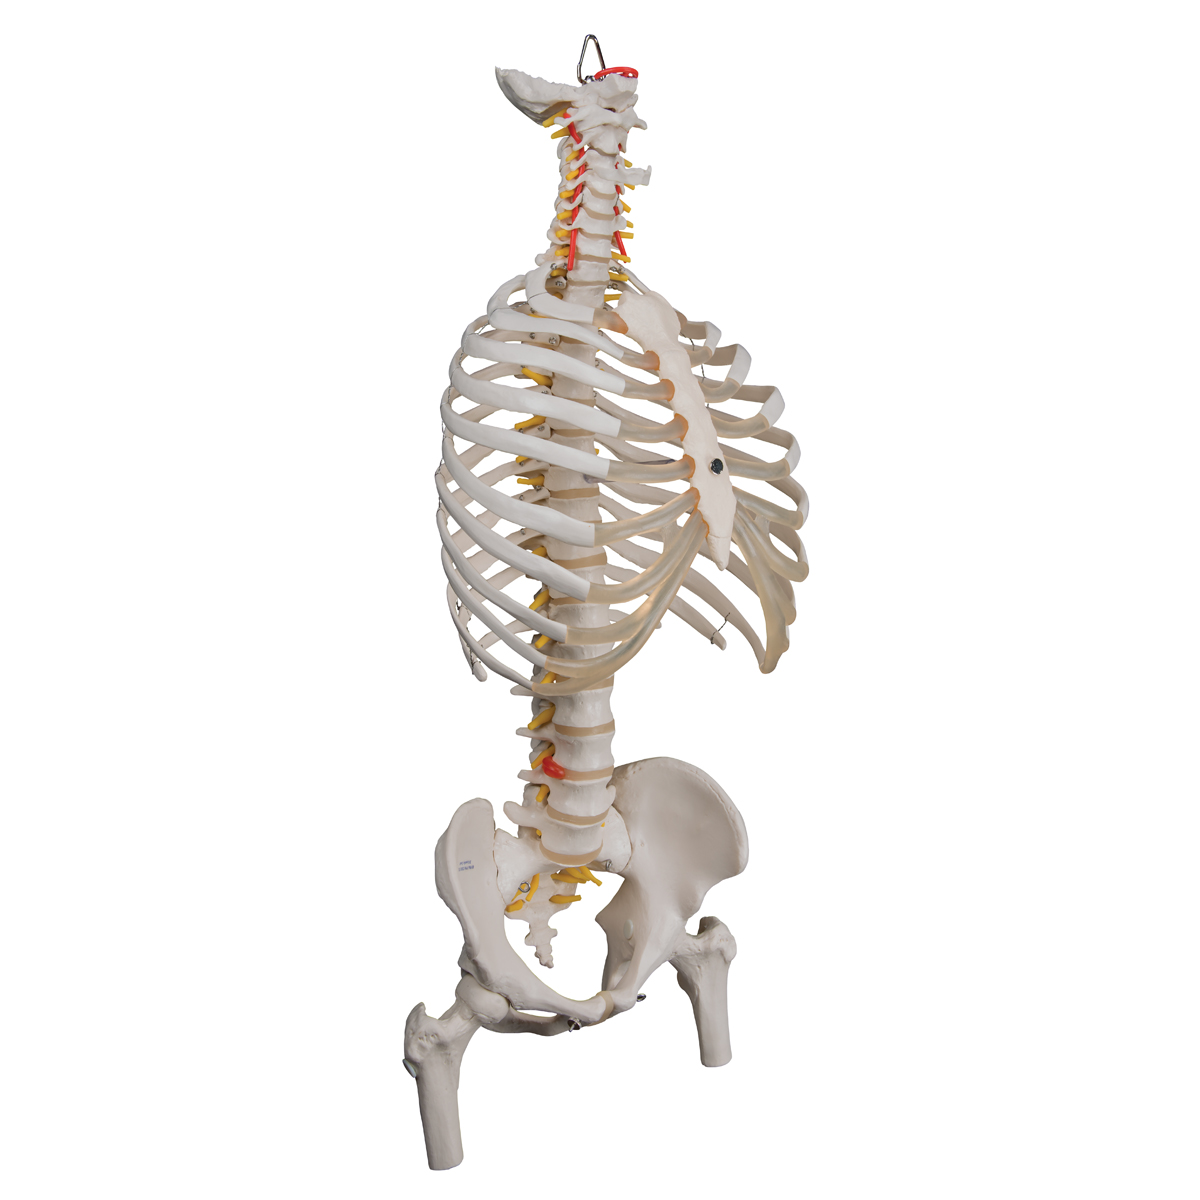 Coloana vertebrala flexibila cu coaste si cap de femur, material didactic biologie